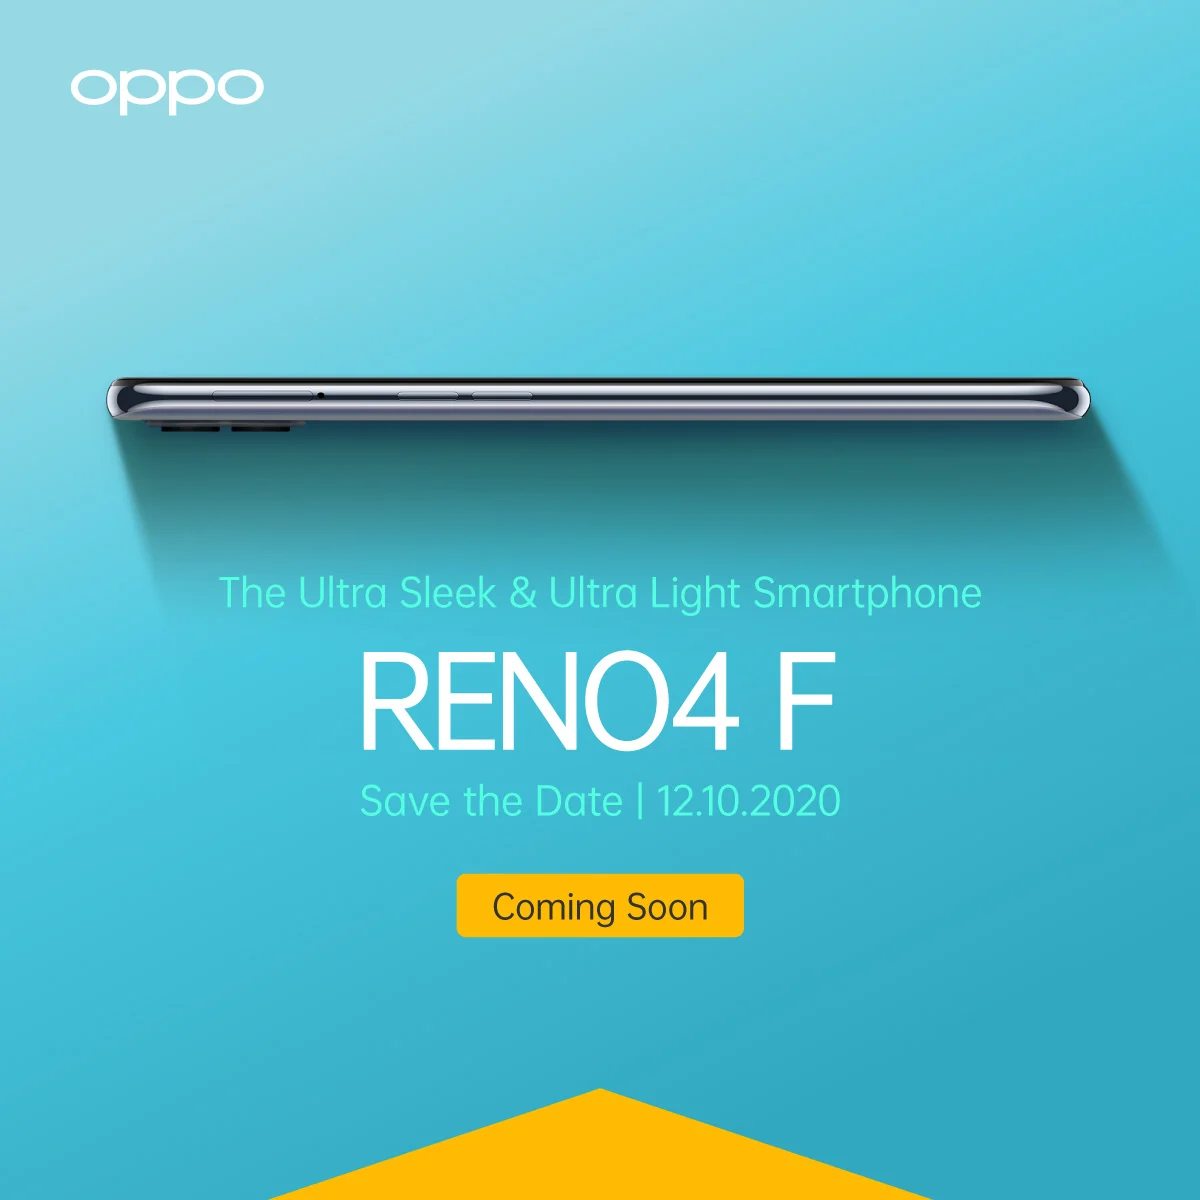 OPPO анонсировала смартфон OPPO Reno4 F. Его представят 12 октября (Reno4 F)